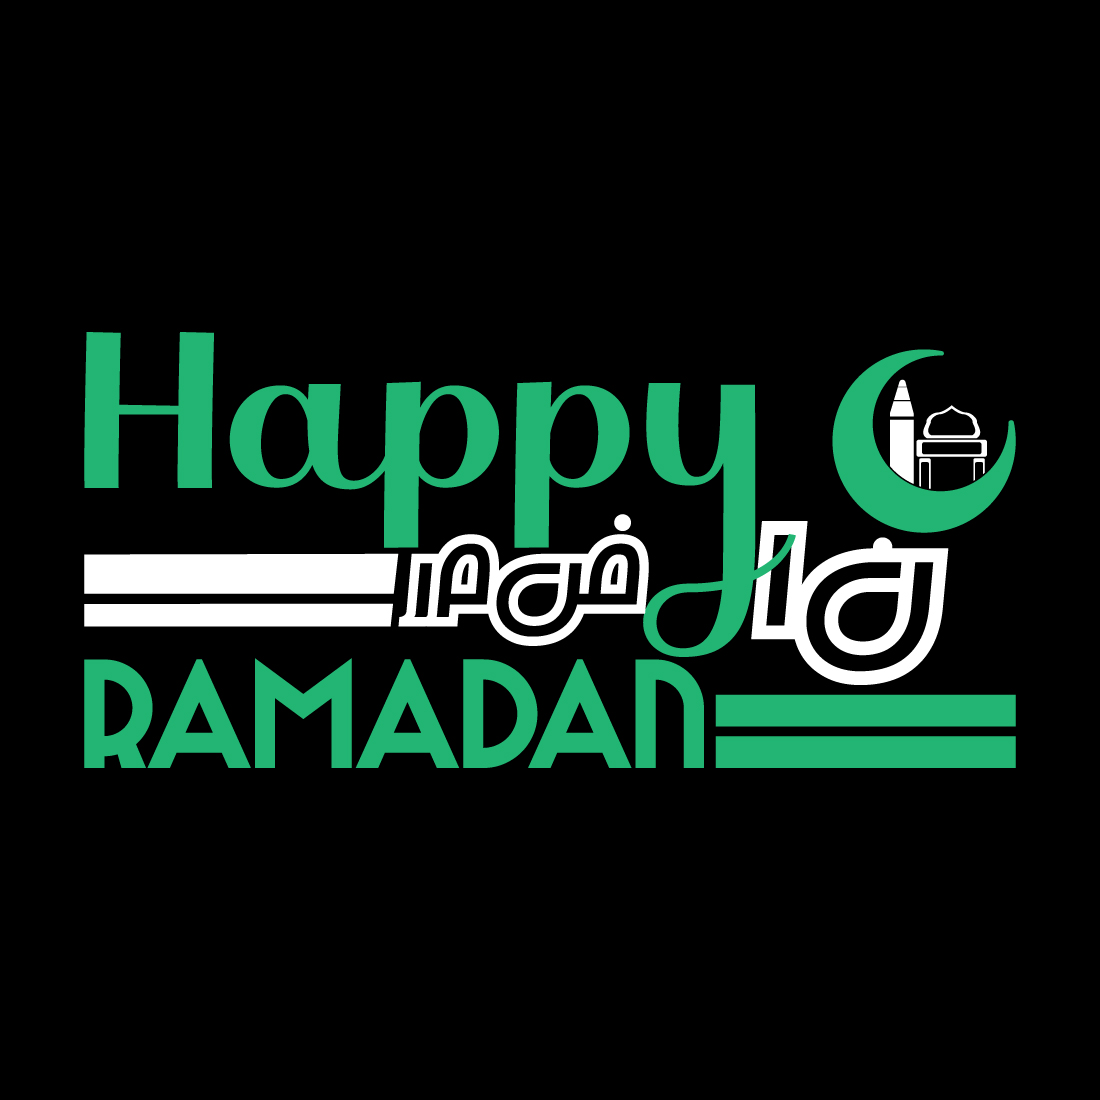 Ramadan modern text-based t-shirt design cover image.